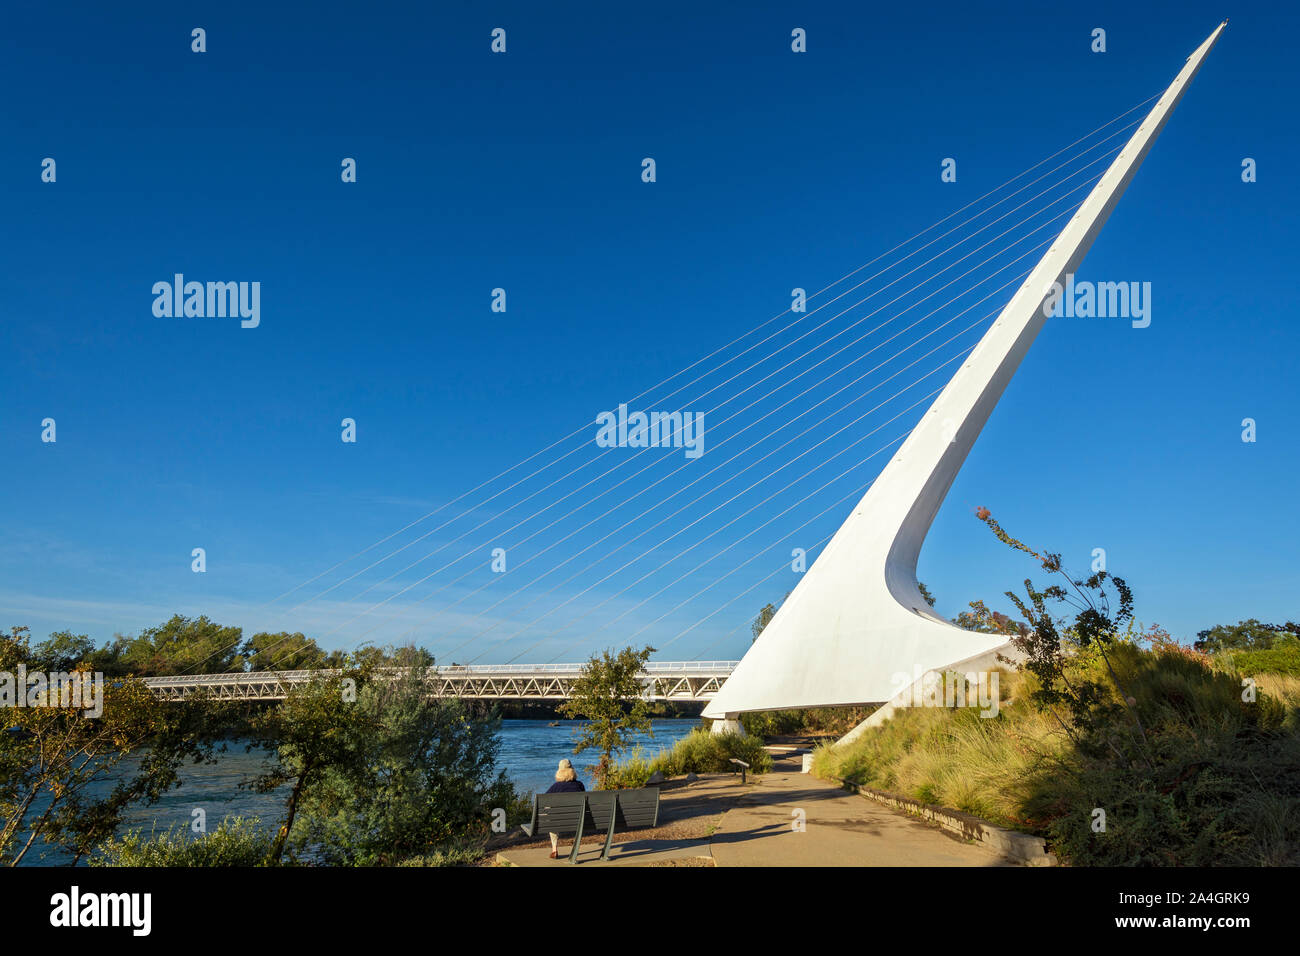 California, Redding, Sundial Bridge at Turtle Bay Exploration Park, spans Sacramento River, woman stting on bench Stock Photo